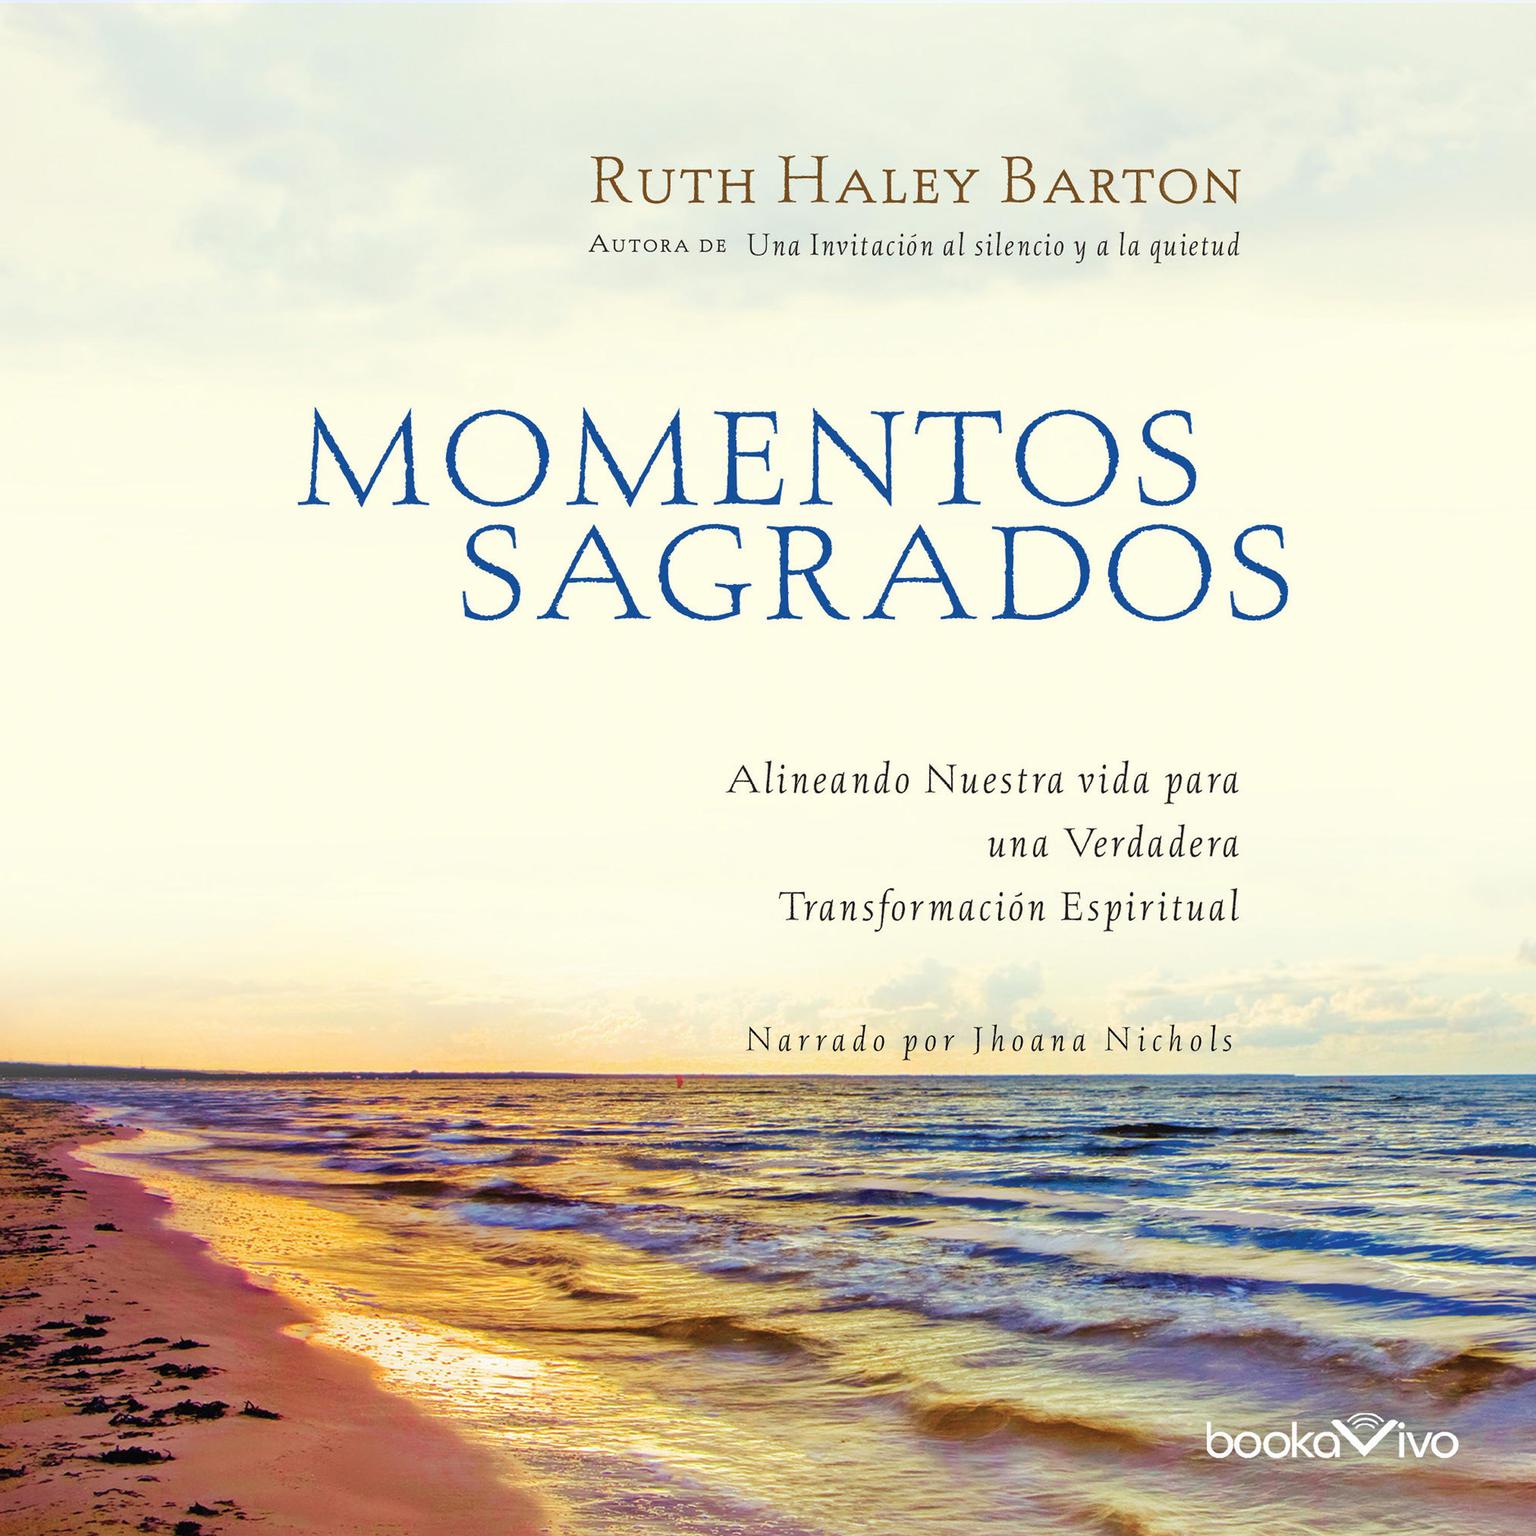 Momentos Sagrados (Sacred Rhythms): Alineando Nuestra vida para una Verdadera Transformacion Espiritual (Arranging Our Lives for Spiritual Transformation) Audiobook, by Ruth Haley Barton